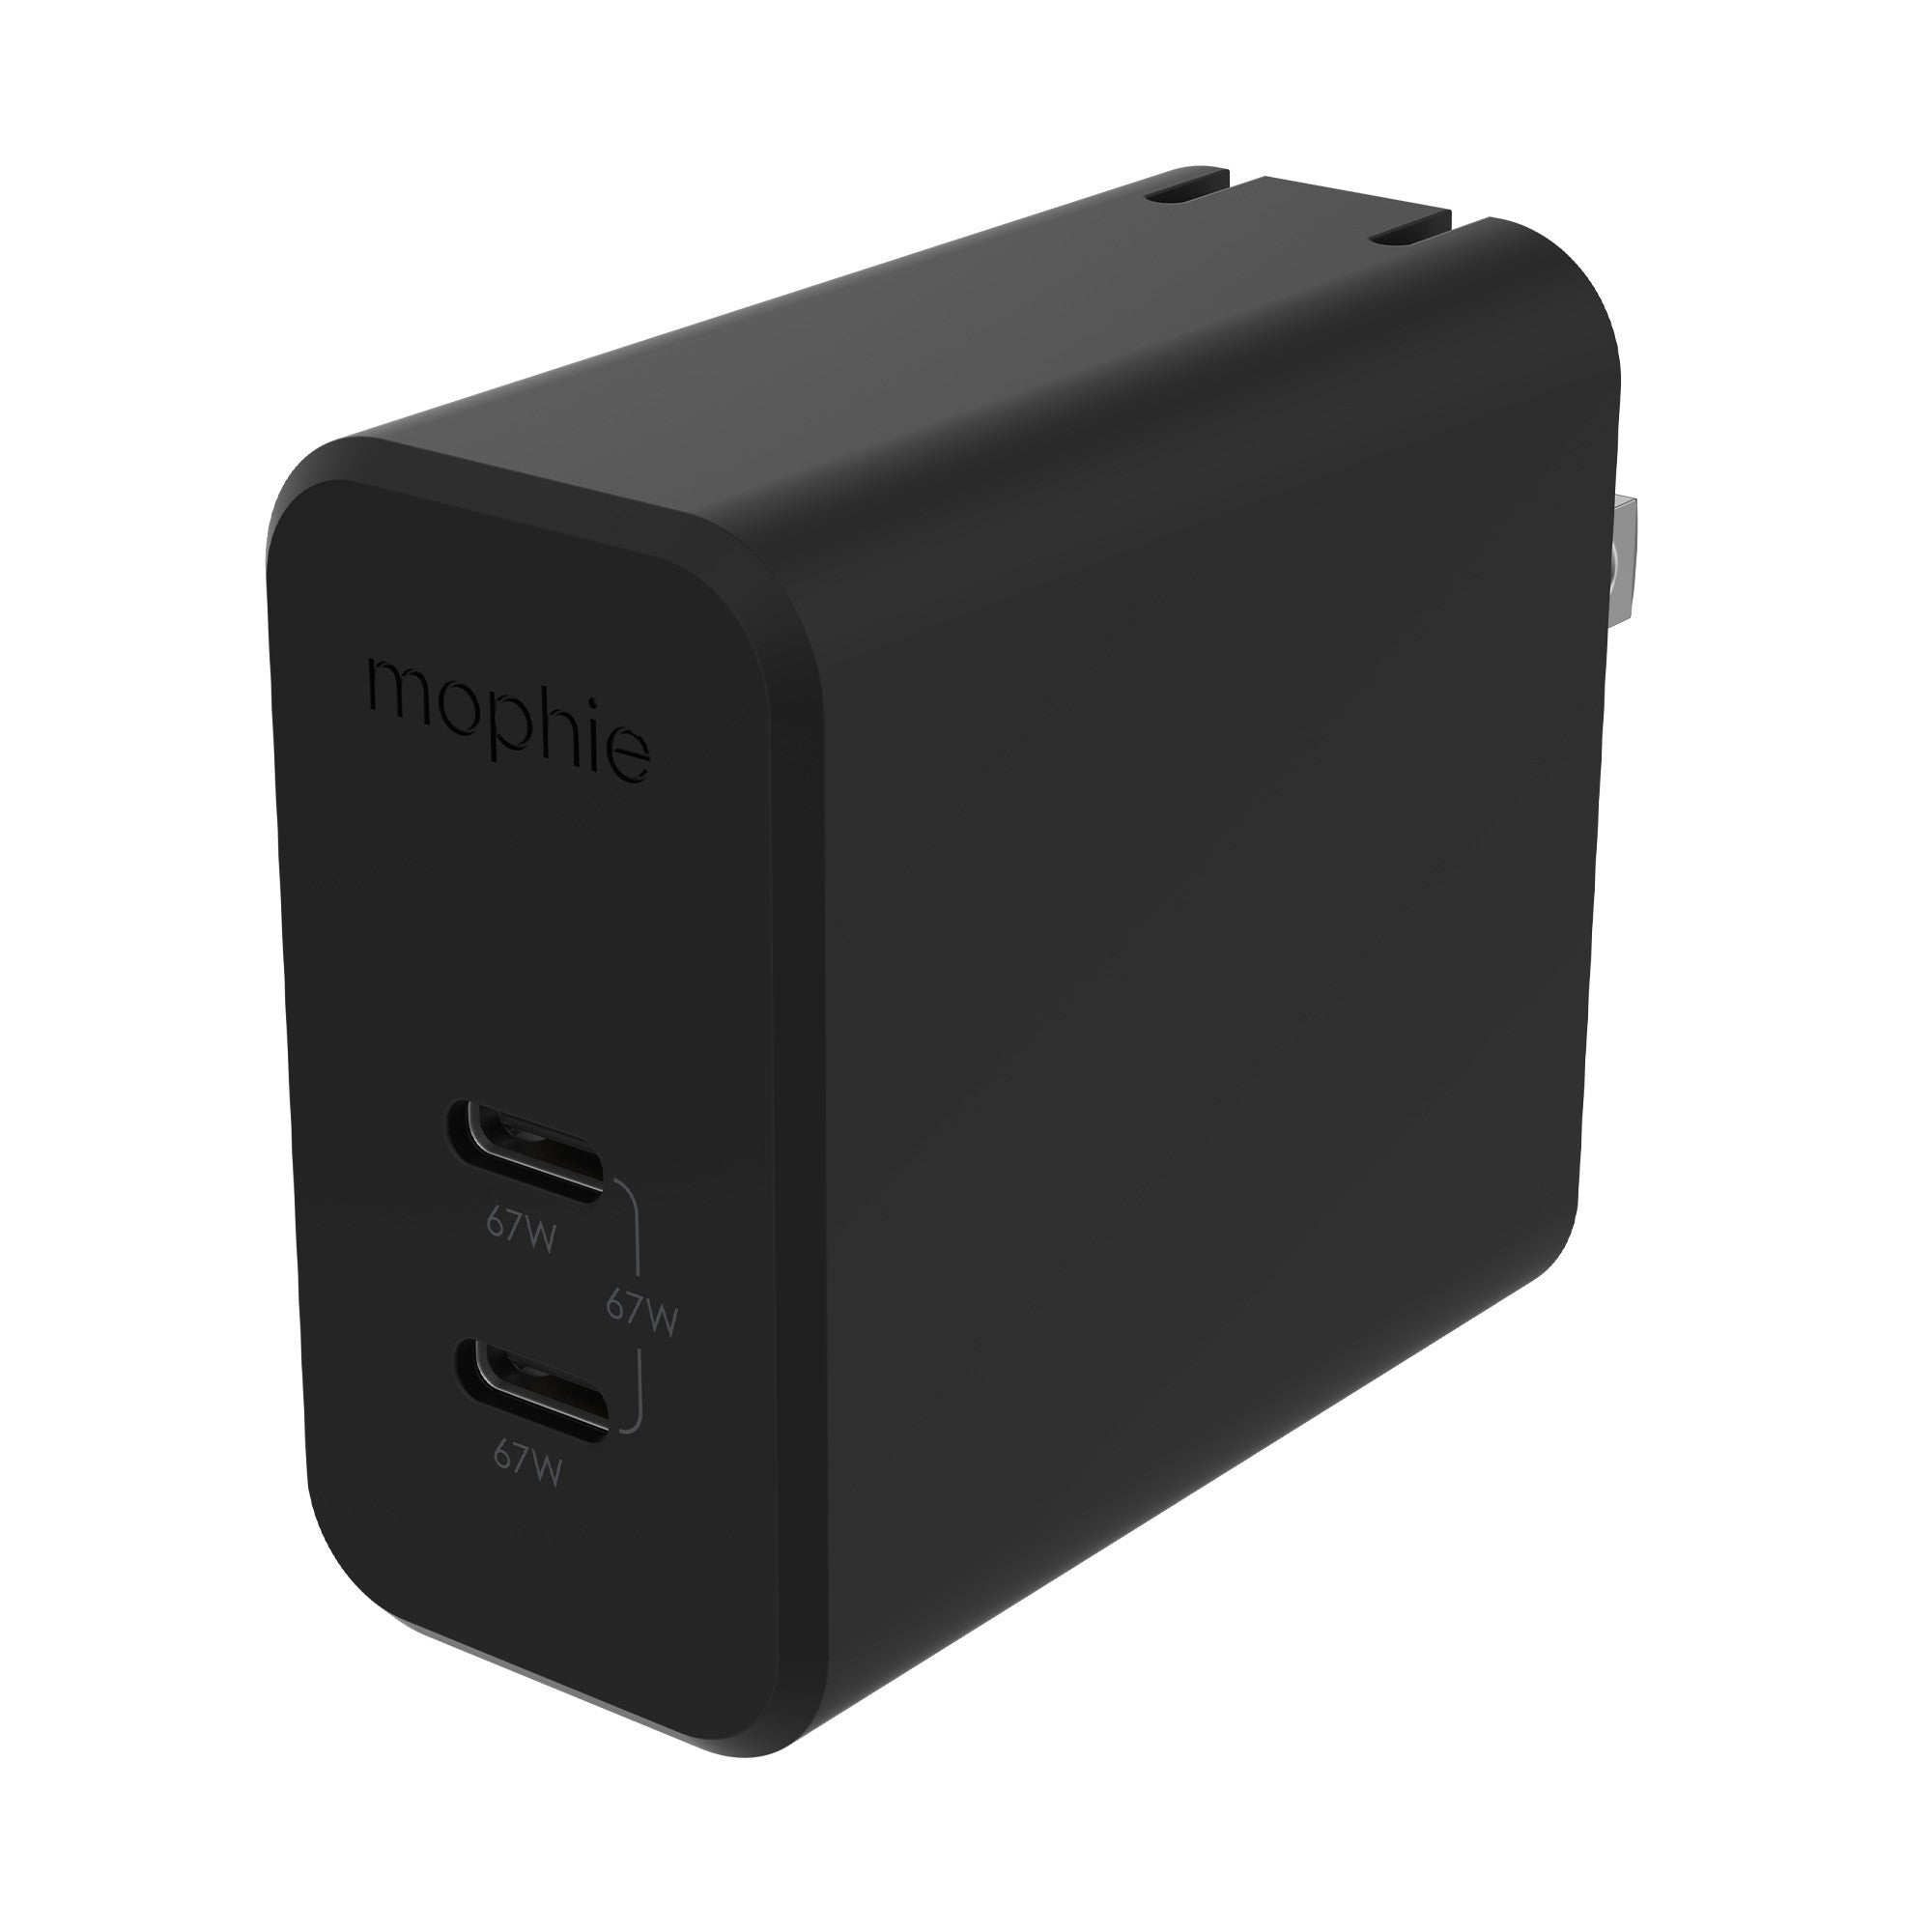 Mophie 67W Dual USB-C Speedport GaN Wall Charger - Black - 15-11938